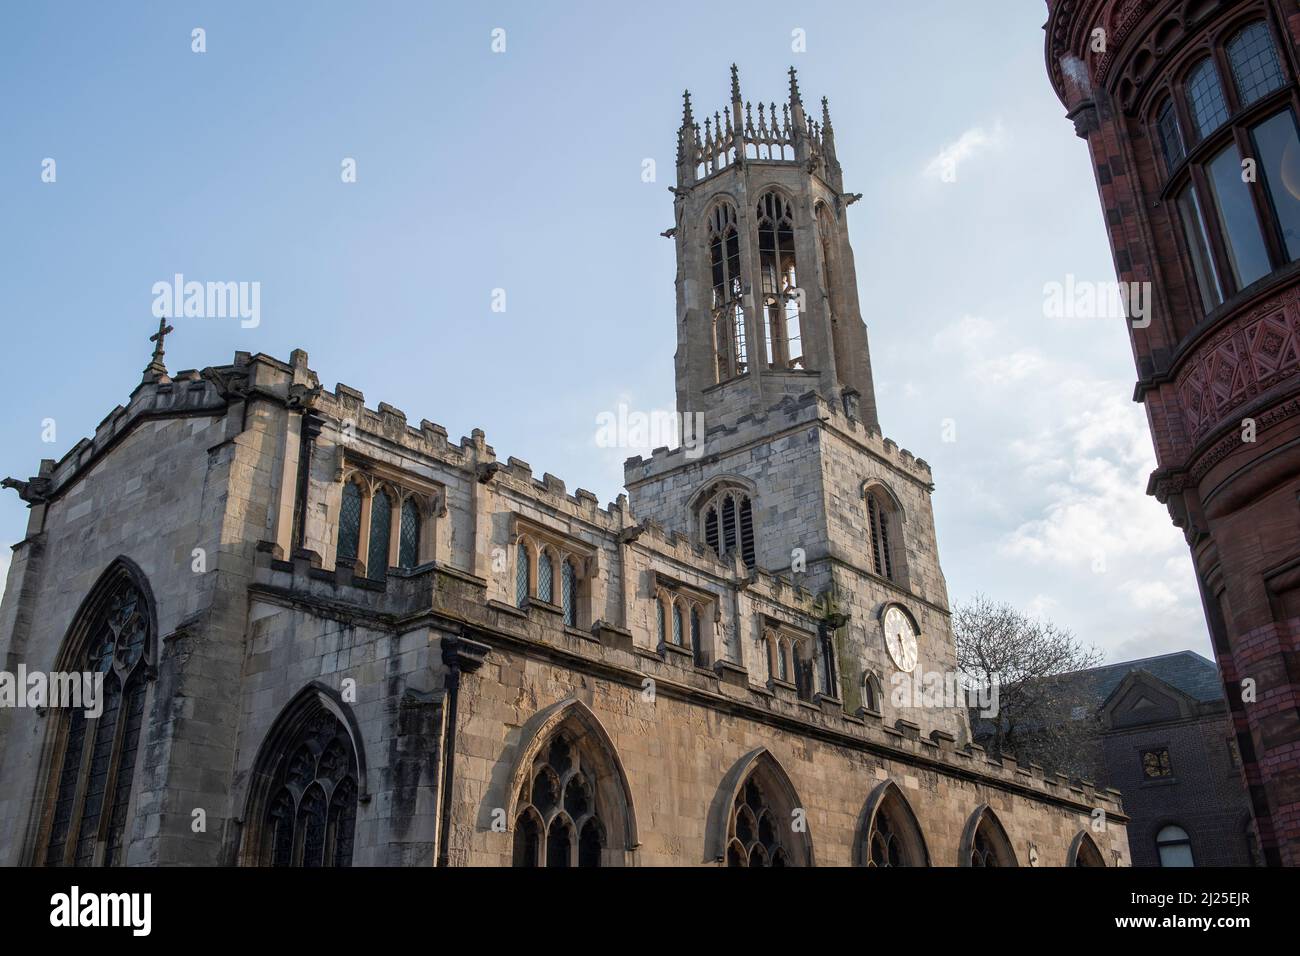 All Saints' Pavement church in York Stock Photo